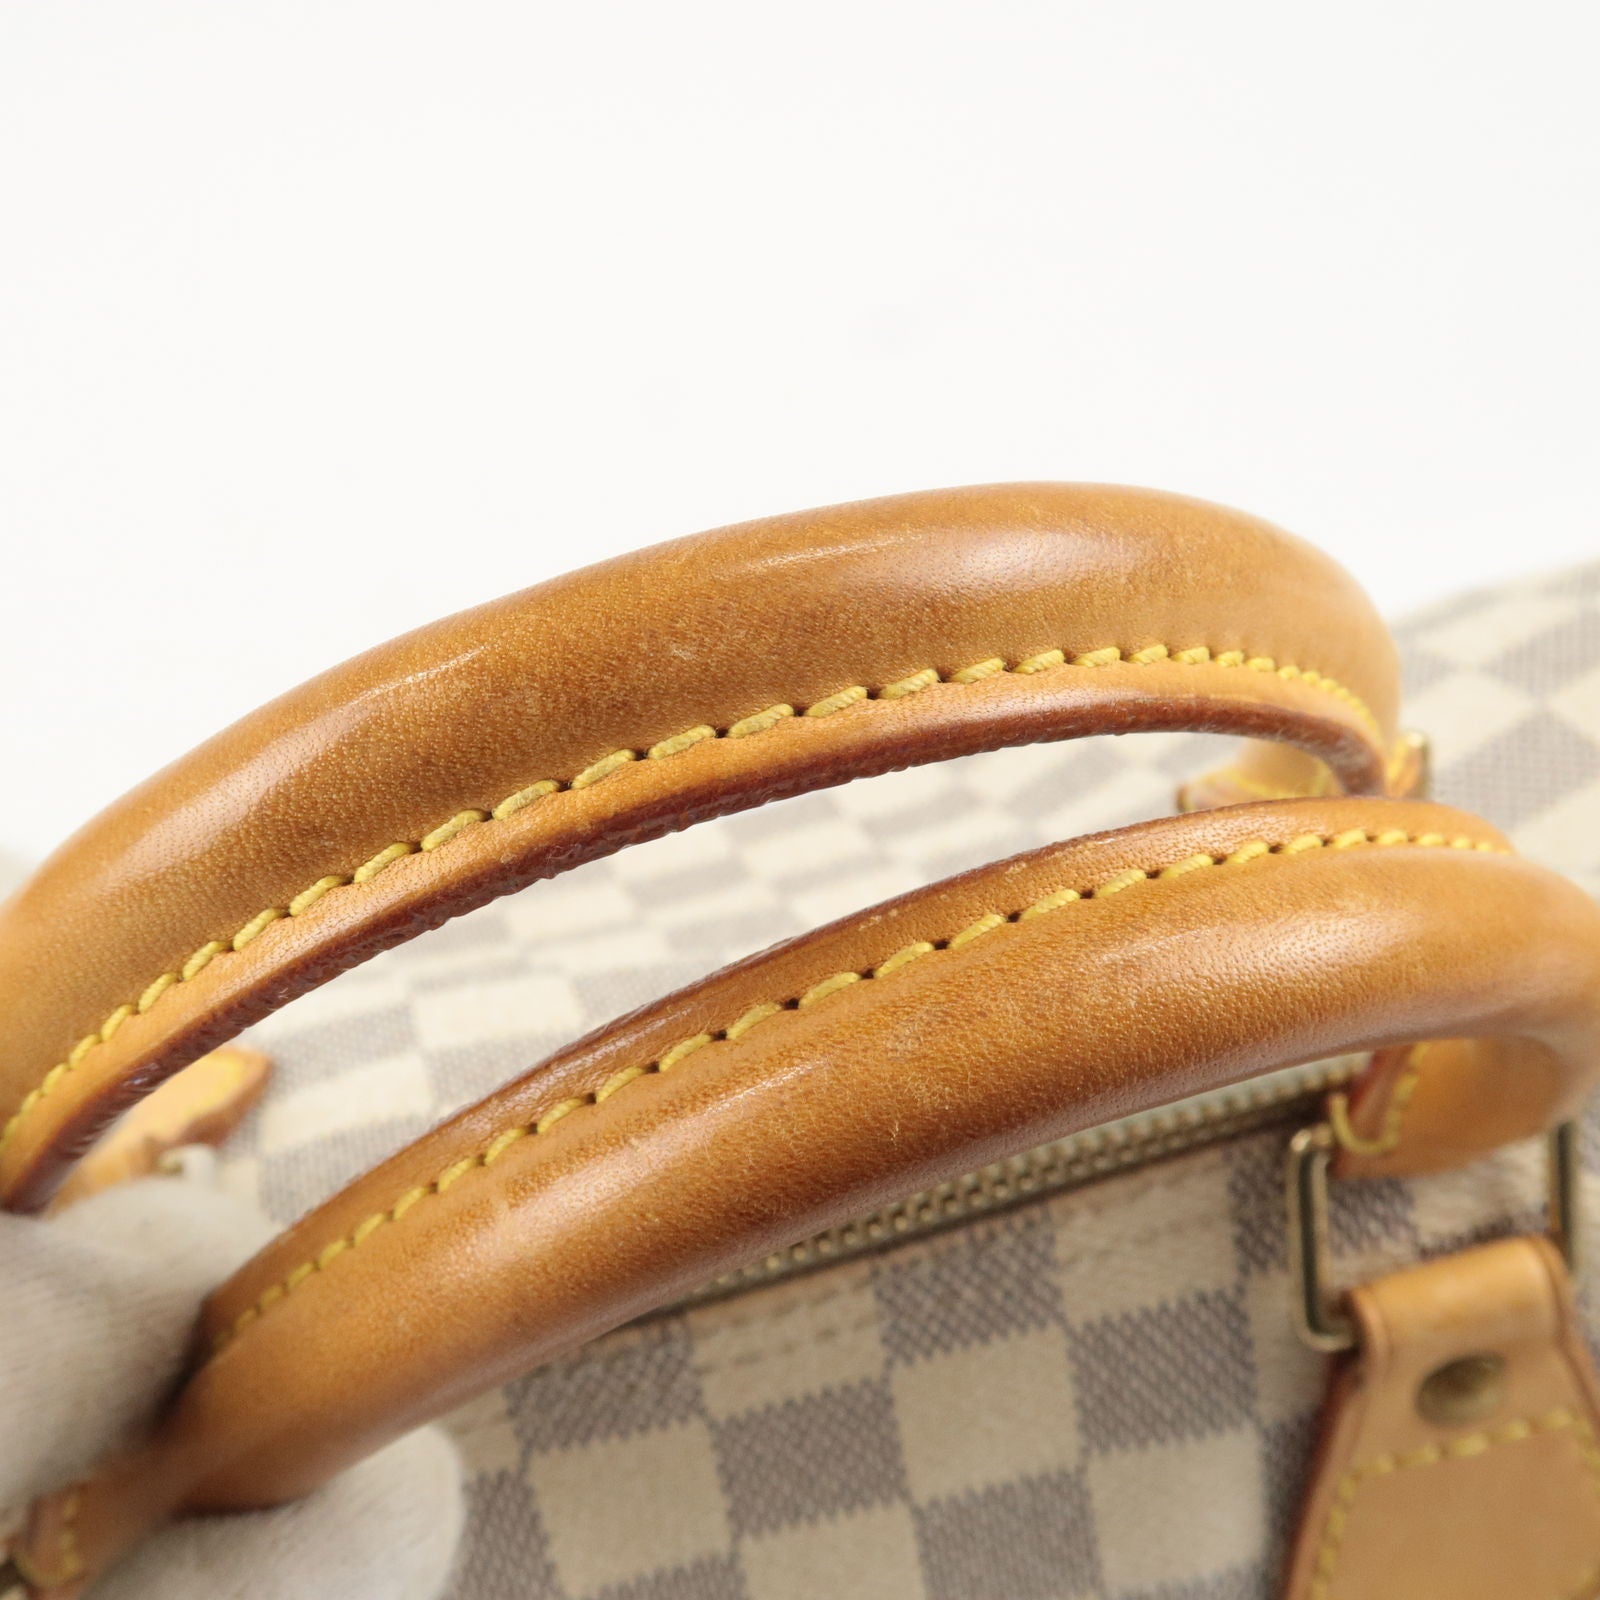 Louis Vuitton Speedy Handbag 368023